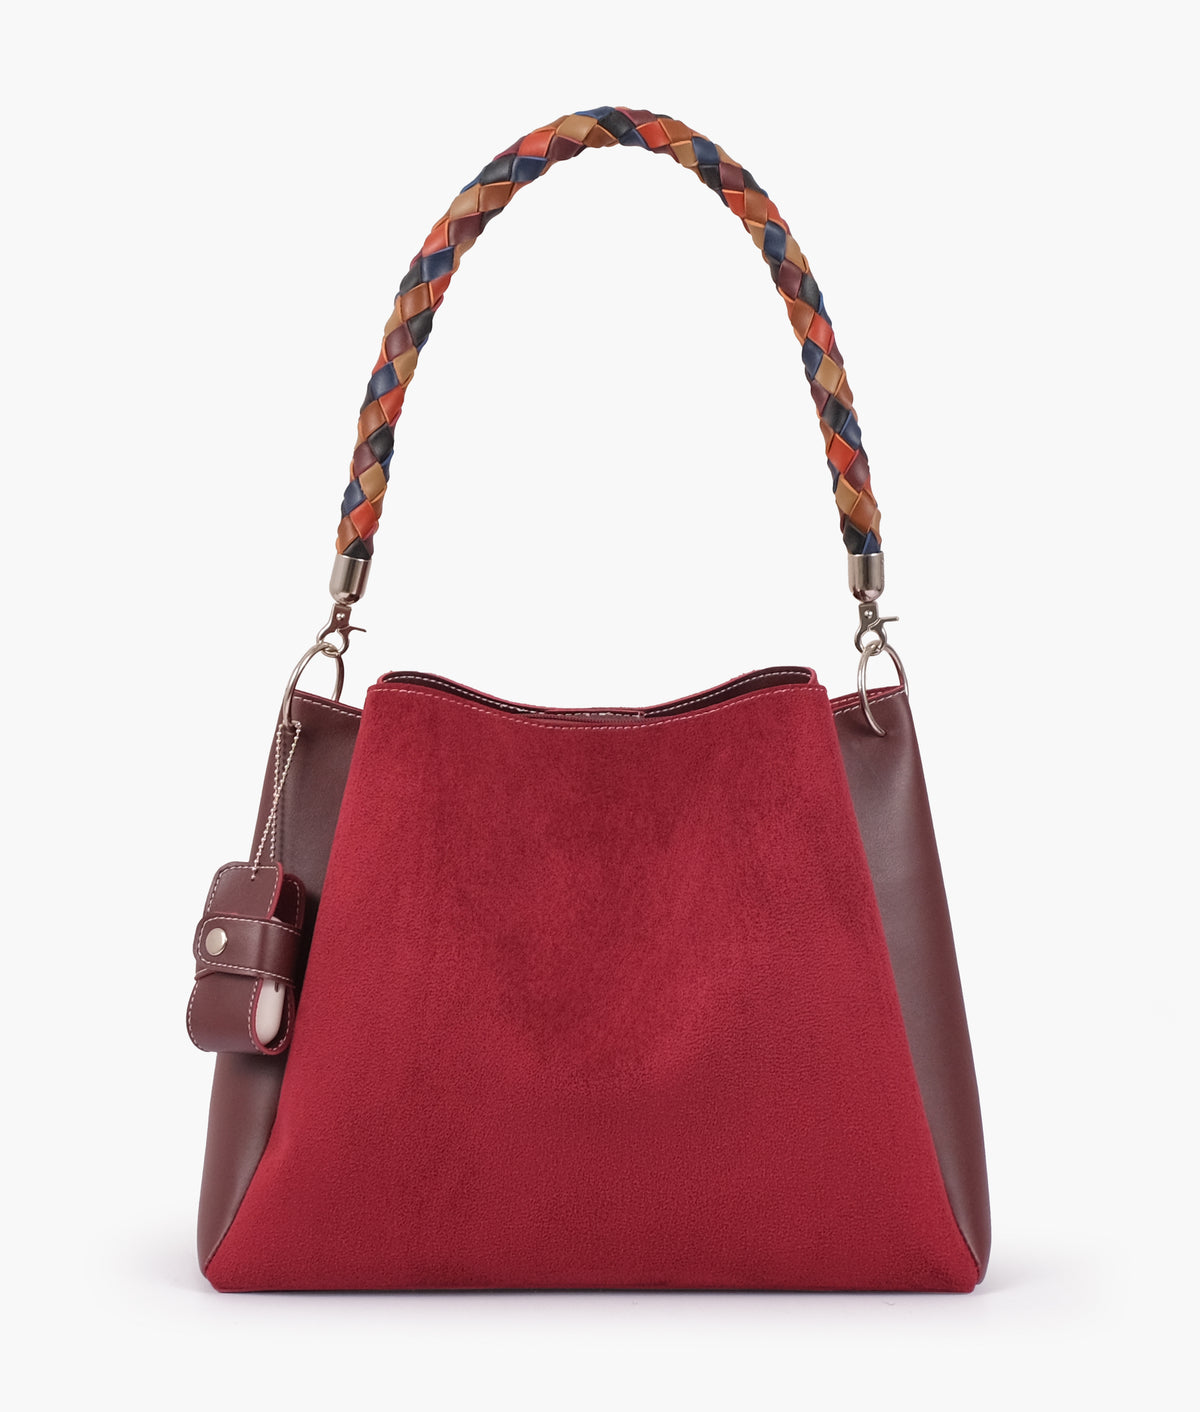 Burgundy suede handbag with braided handle